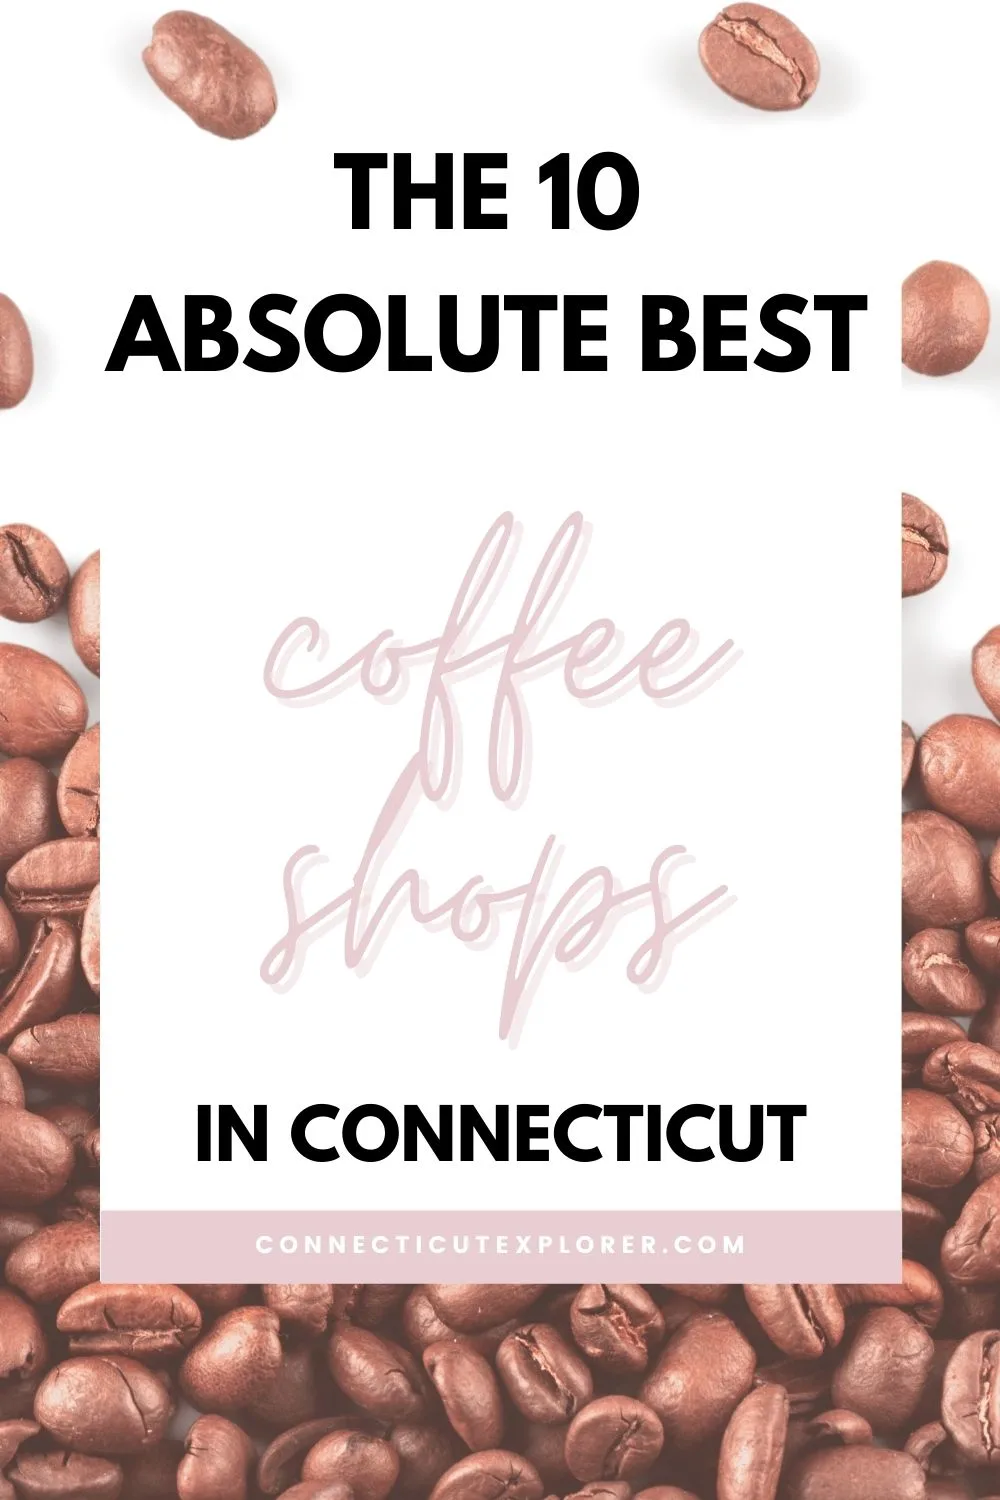 best coffe shops in connecticut pinterest image.